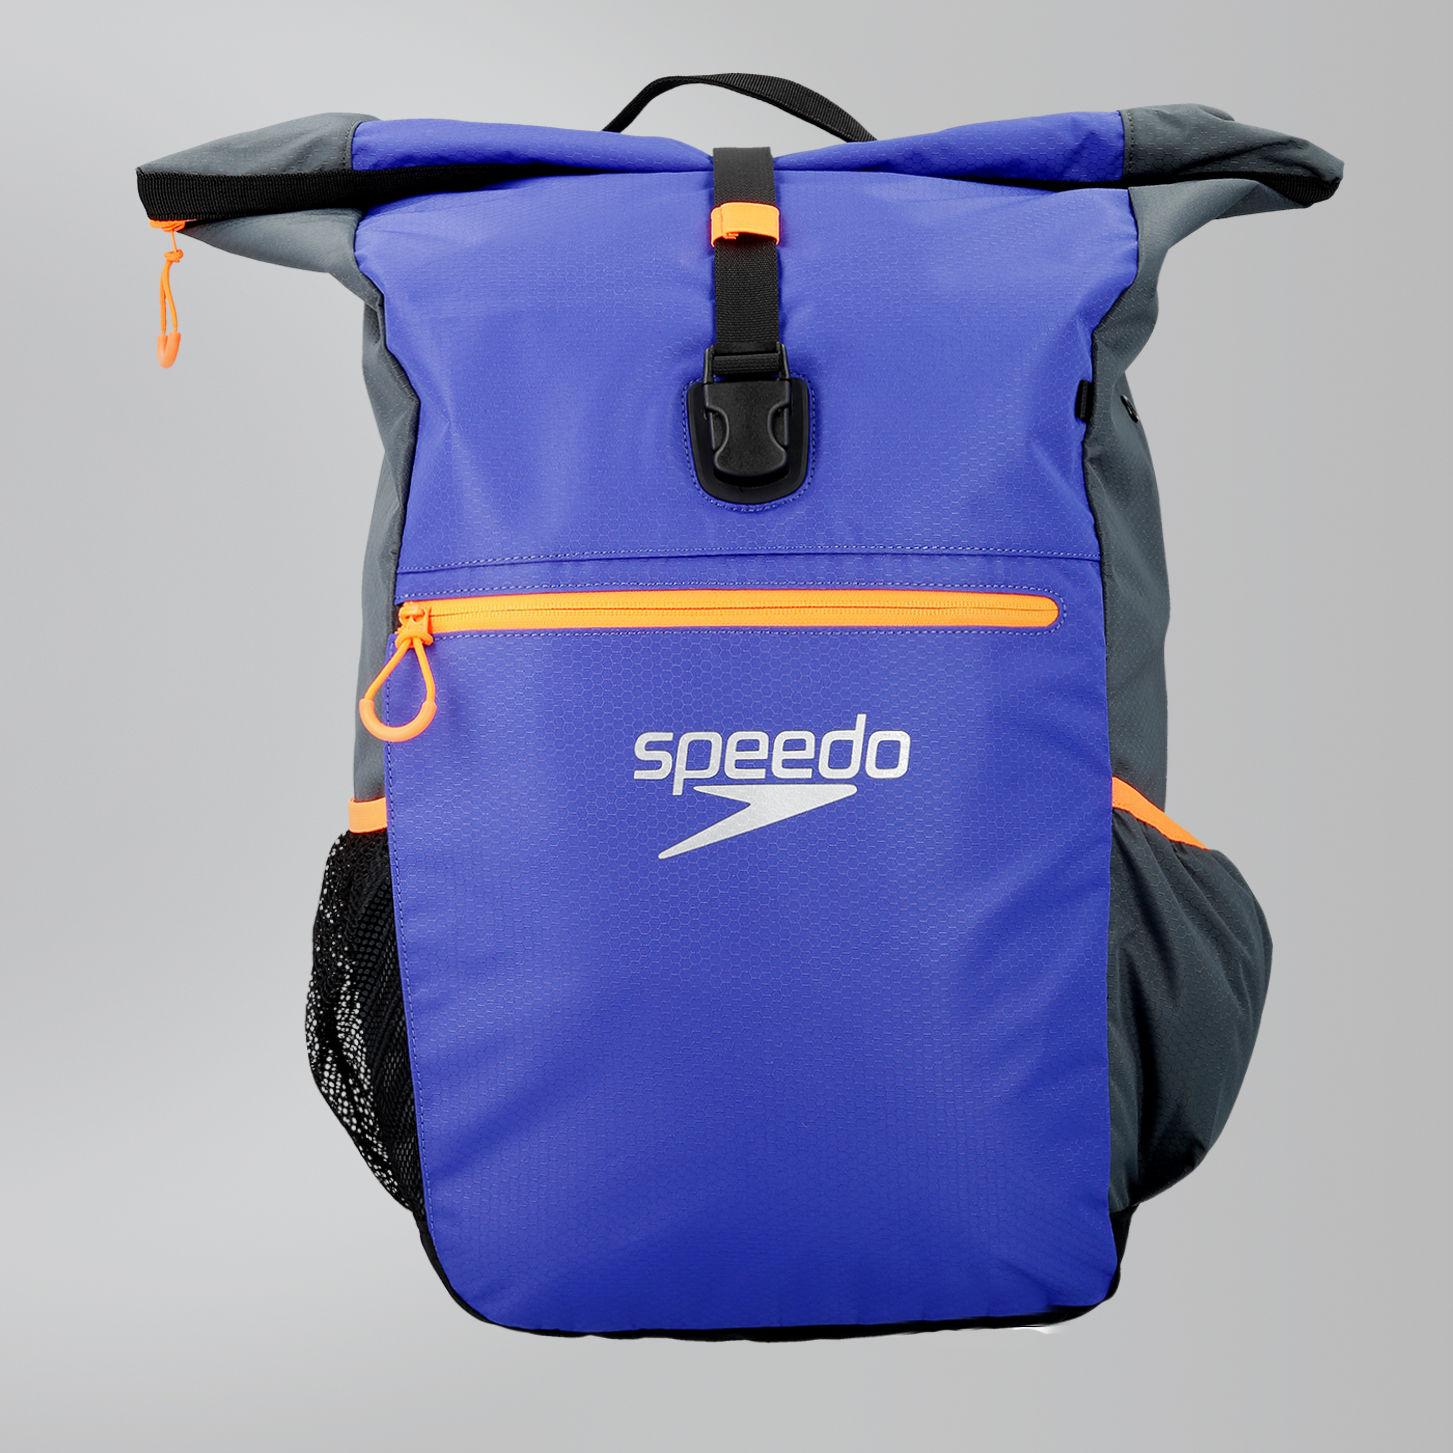 Speedo Gym Practice Swim Pool Travel Duffle Bag 